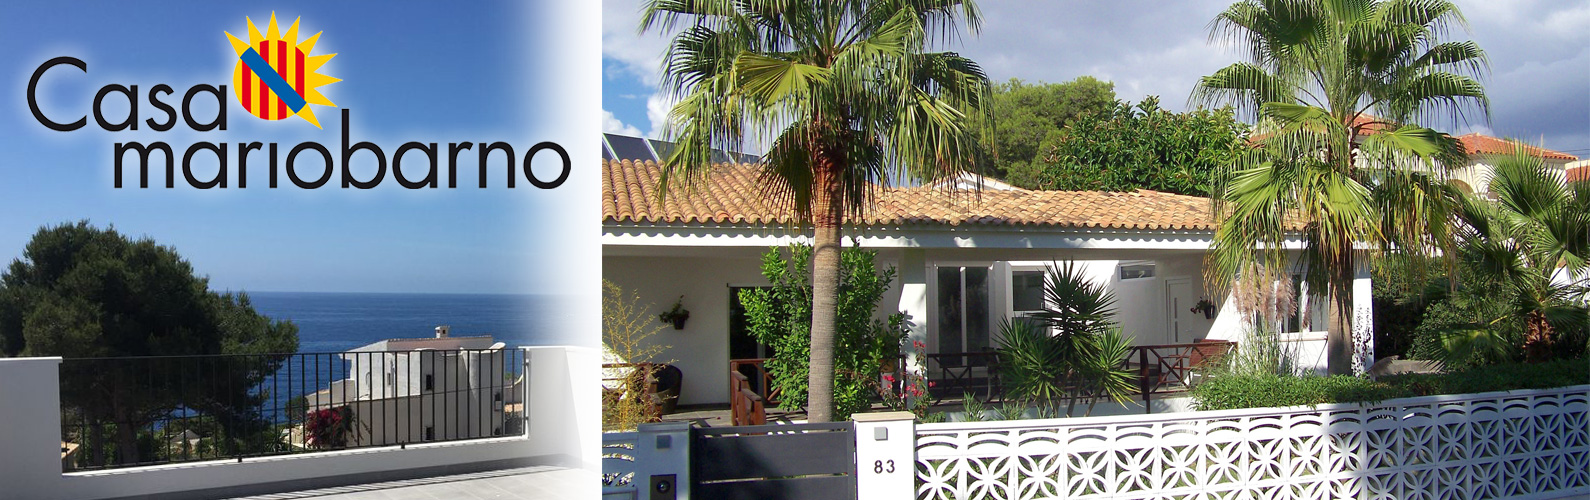 Mallorca Ferienhaus Meerblick Pool preiswert mieten Urlaub Familie Spanien